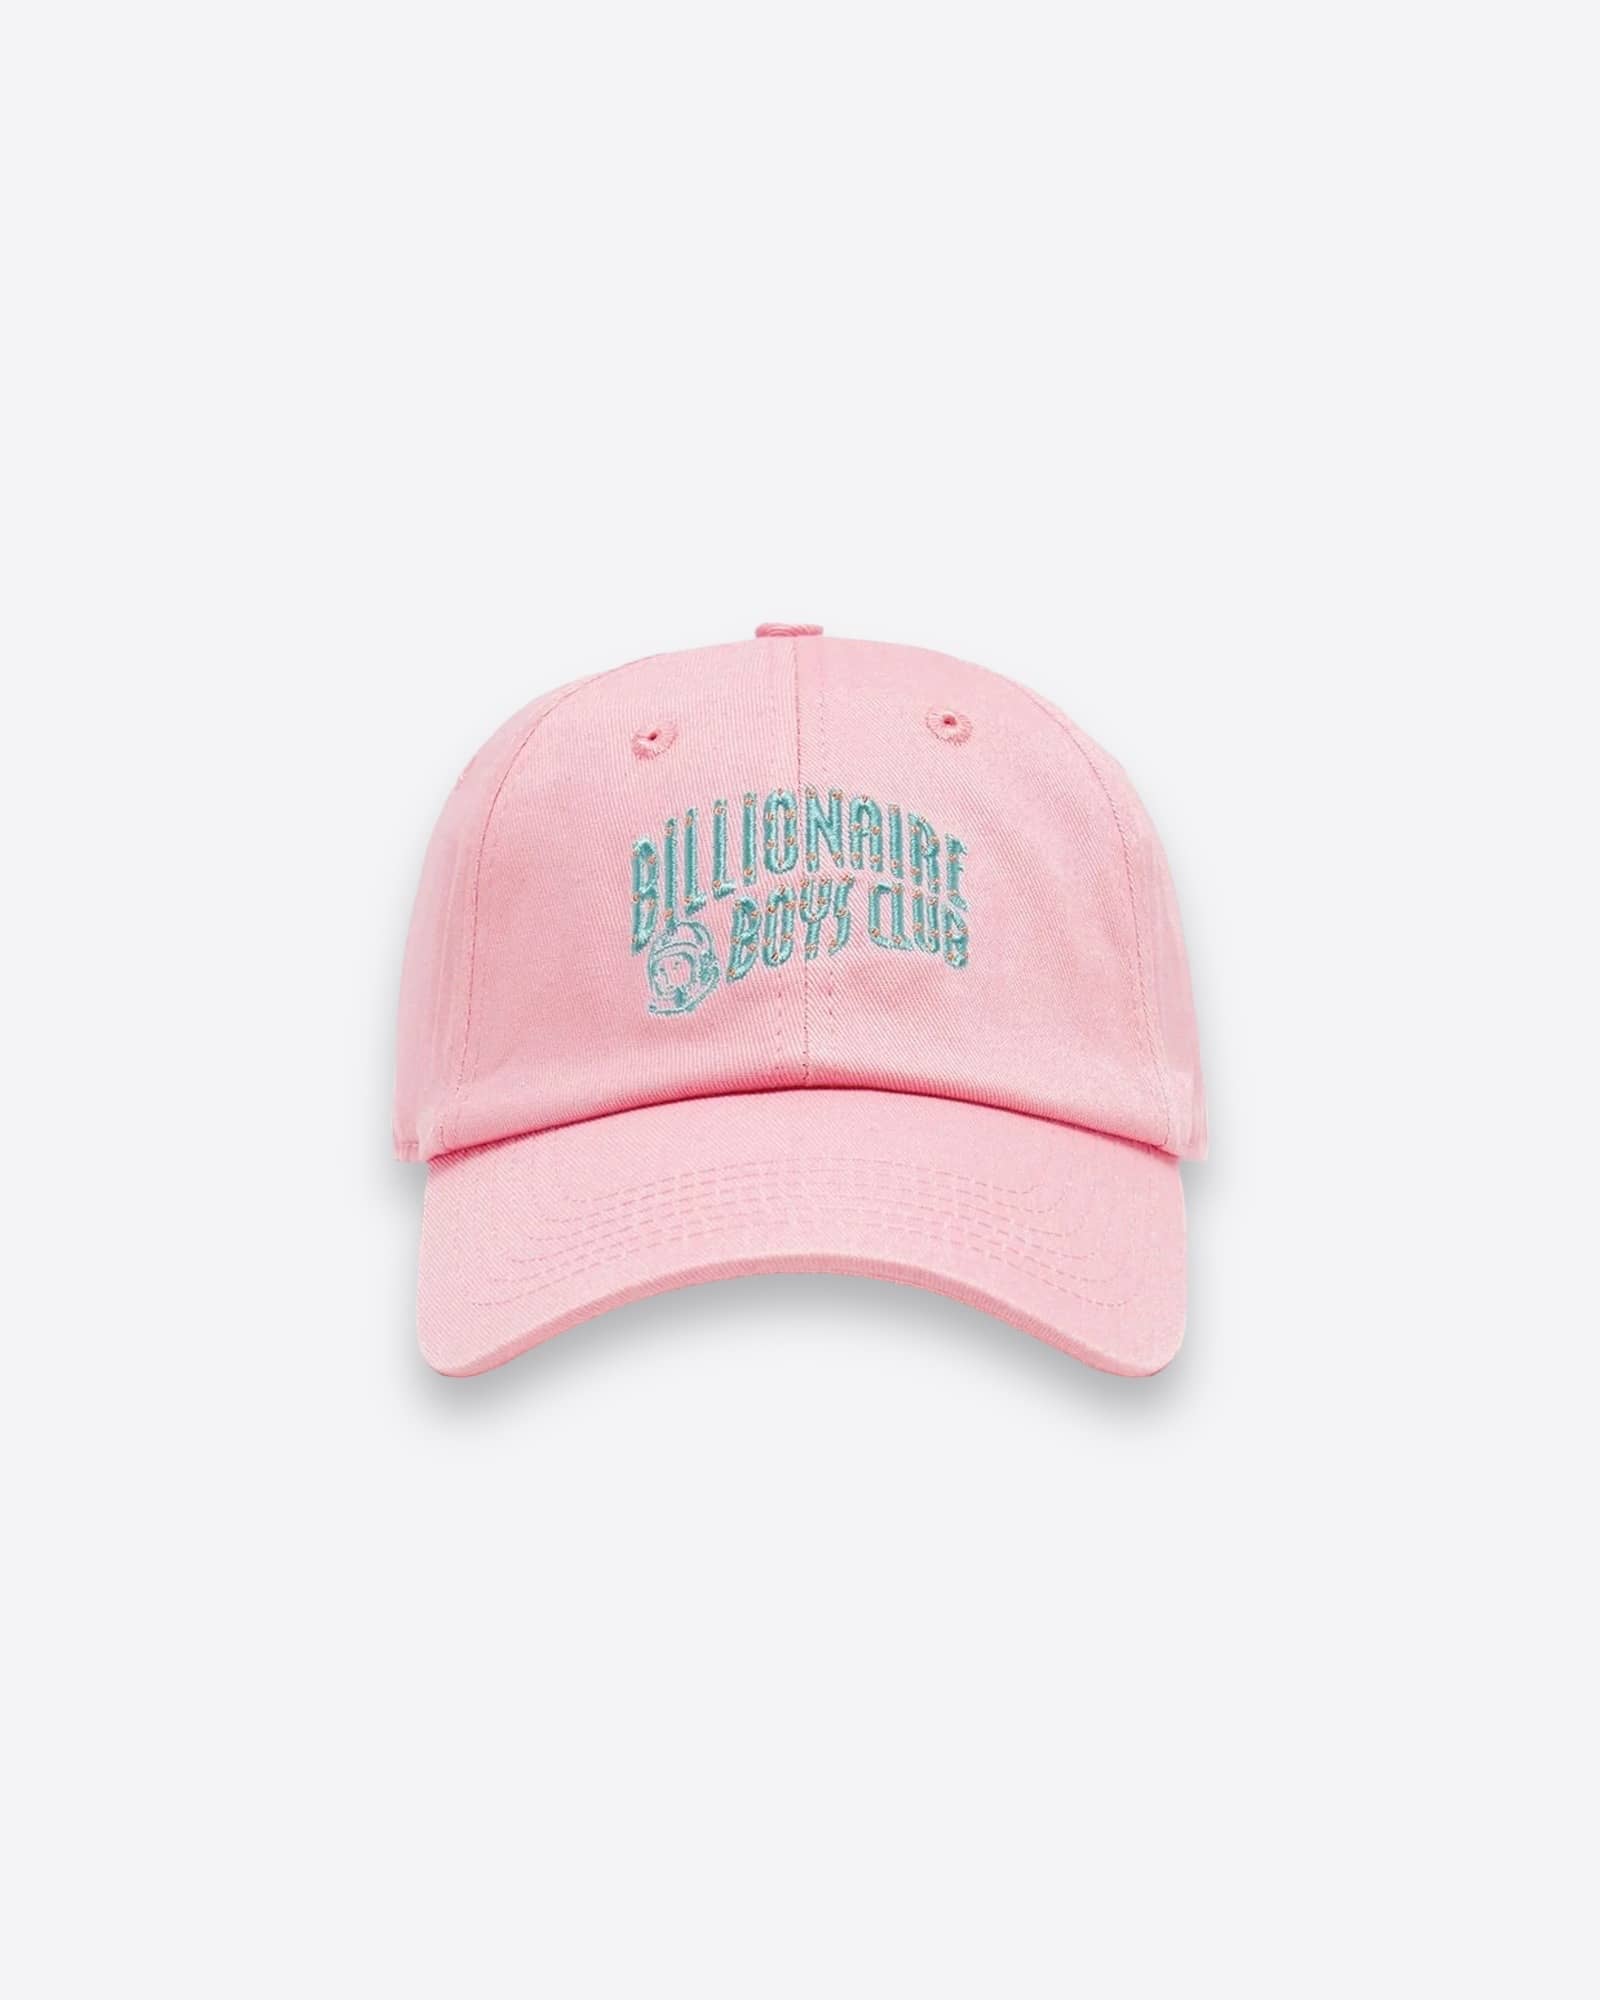 Billionaire Boys Club Arch Logo Curved Visor Pink Cap 